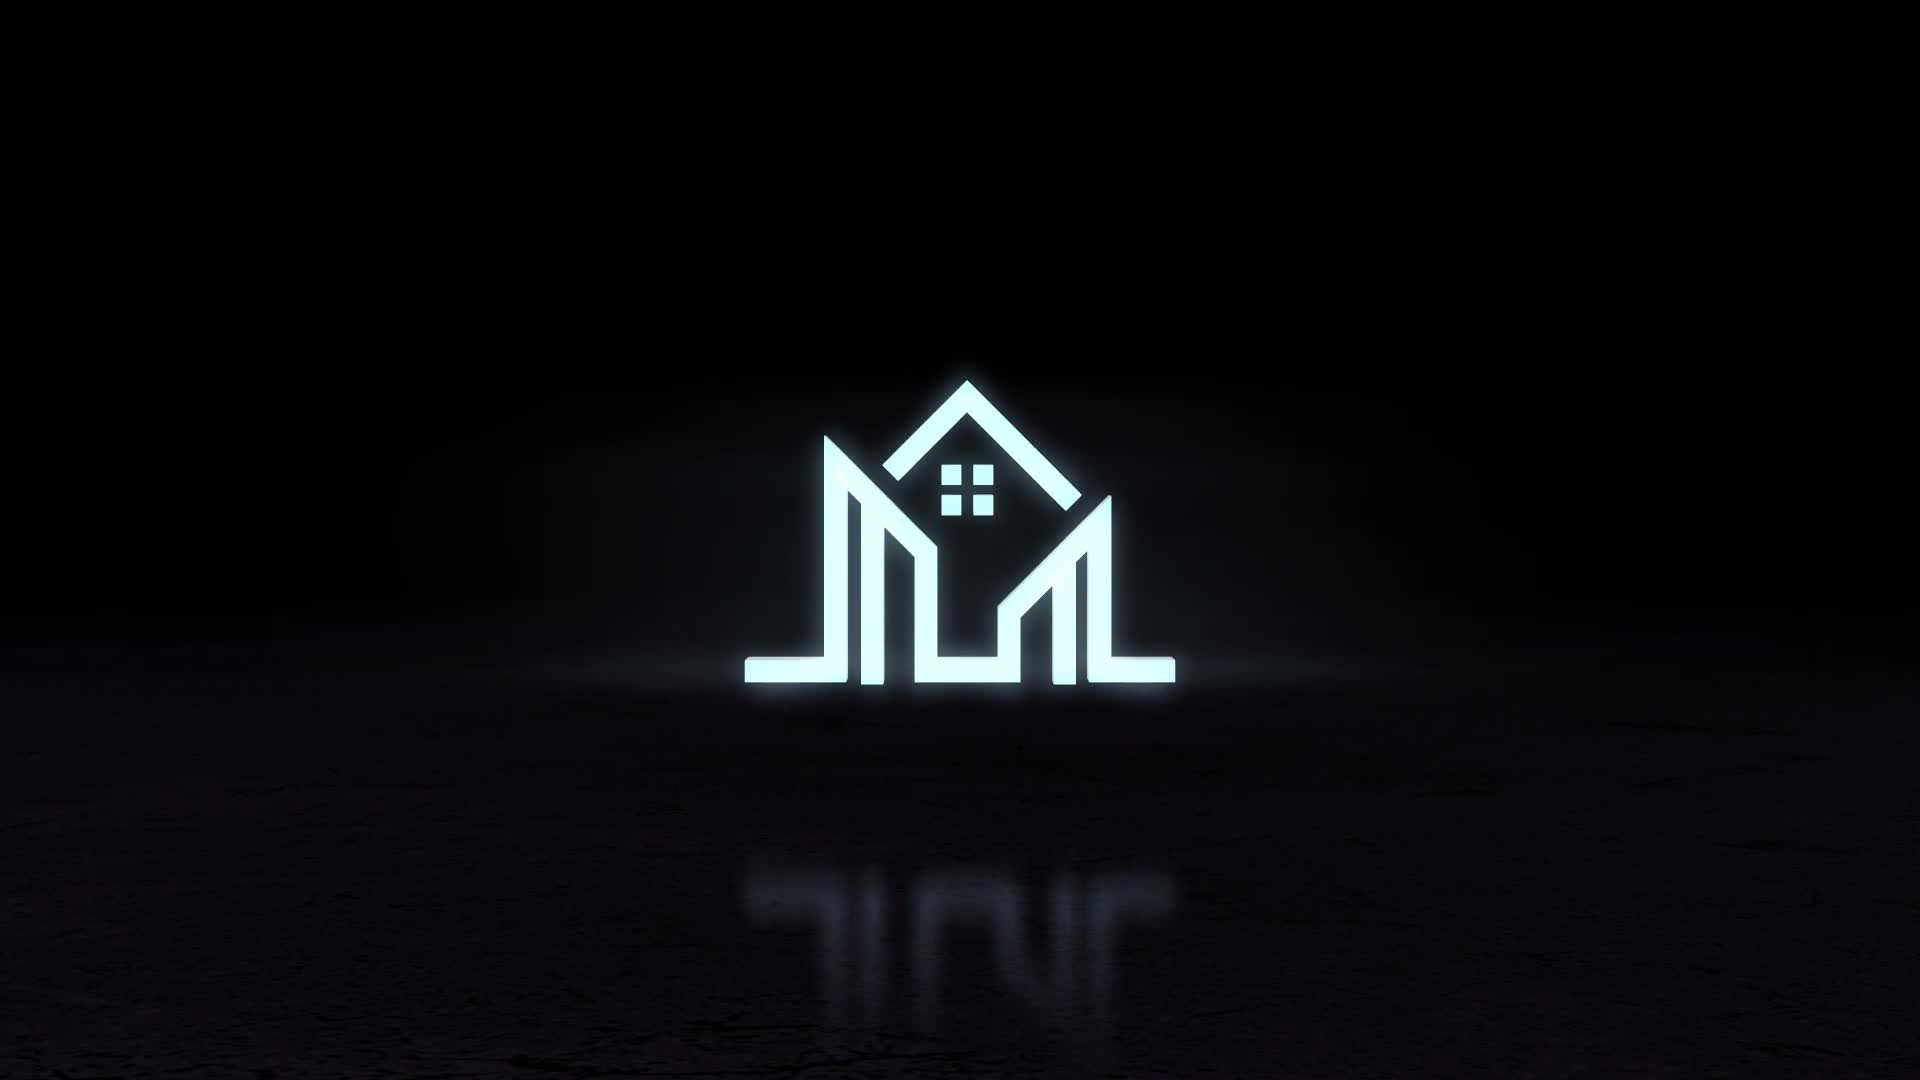  Luxury Real Estate Logo Reveal 